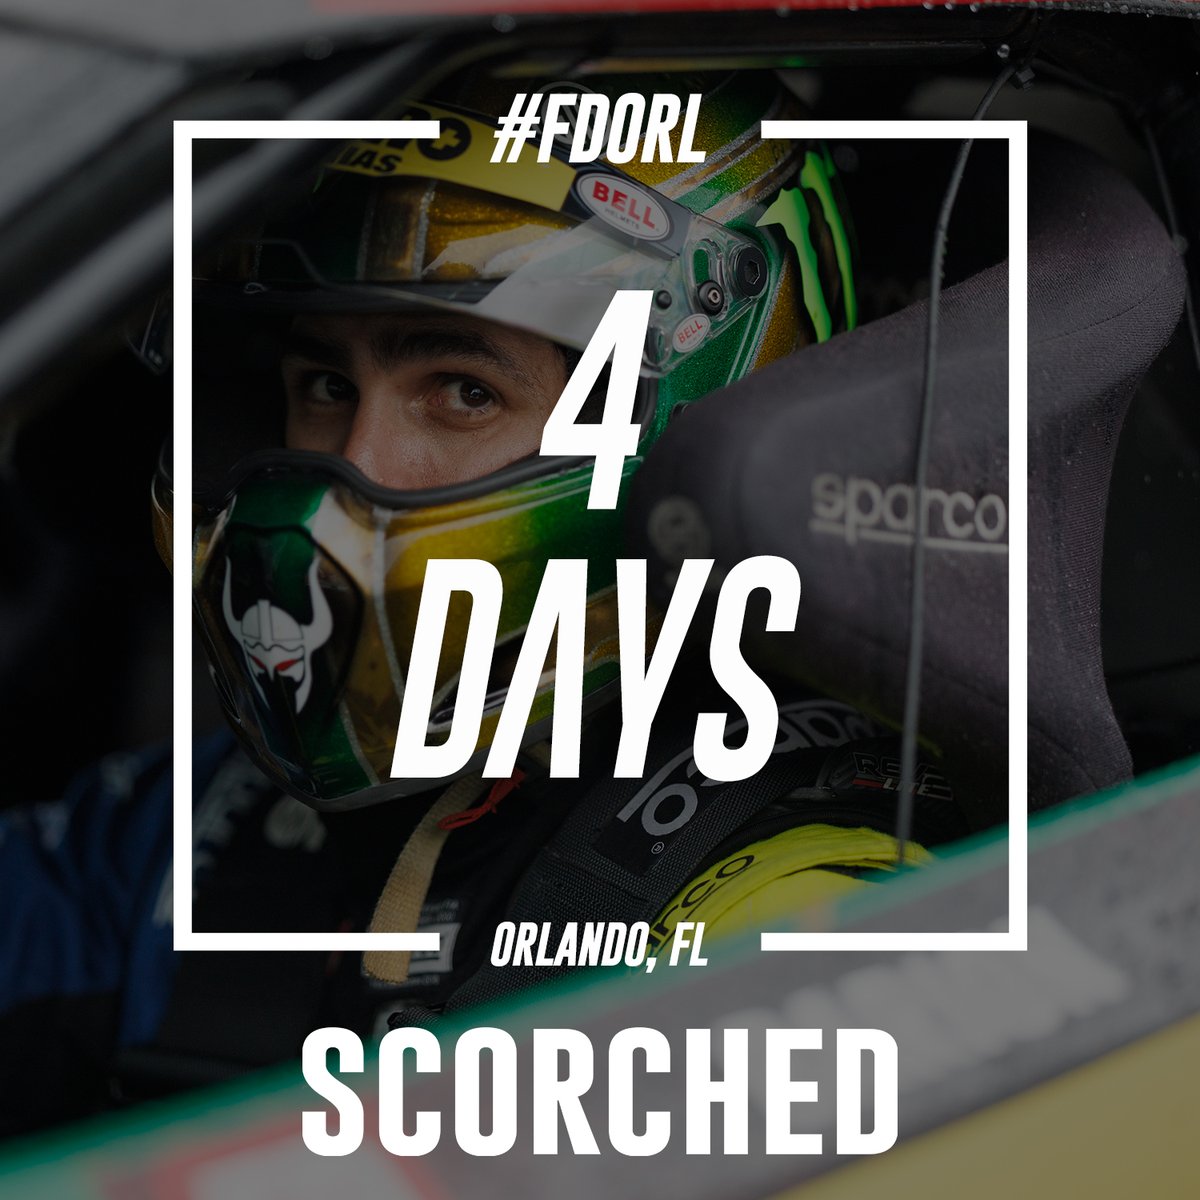 Orlando, the wait is almost over: 4 days left!

#FormulaD #FormulaDRIFT #FDORL